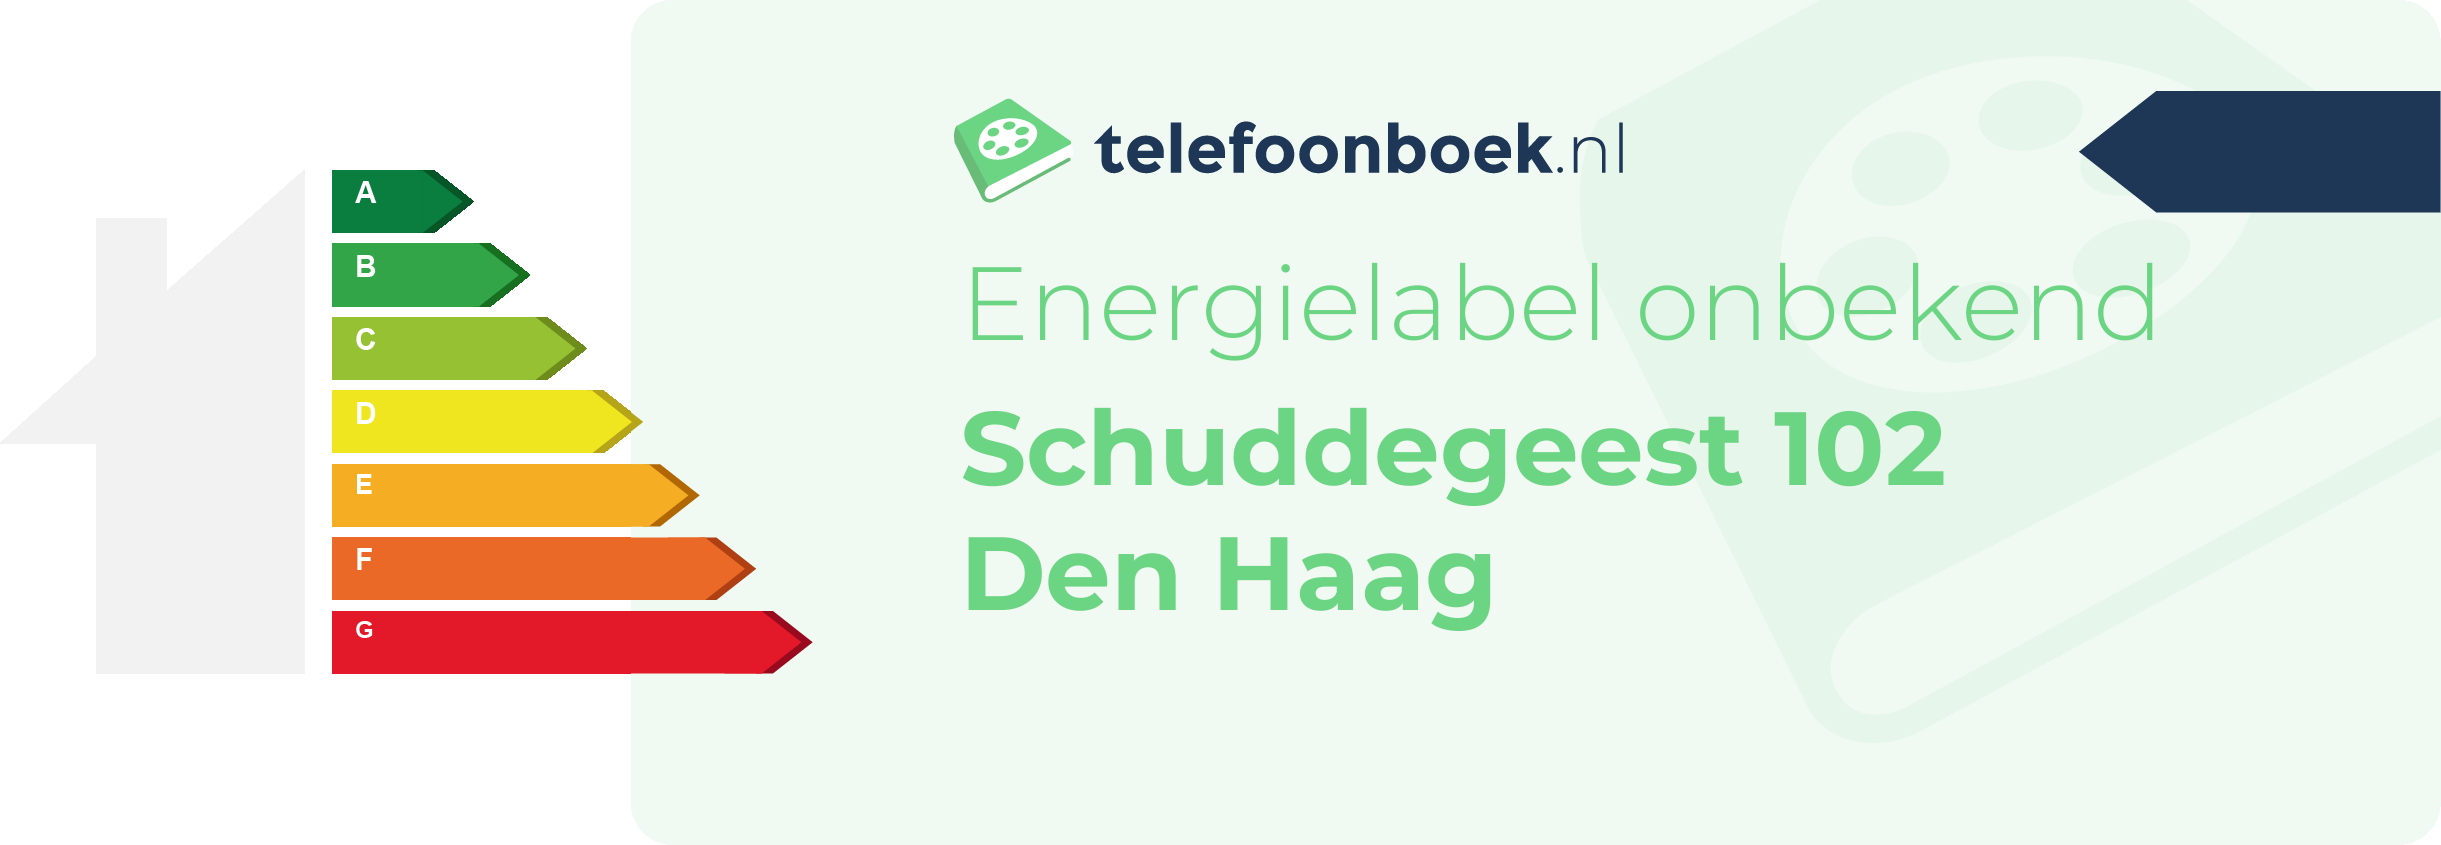 Energielabel Schuddegeest 102 Den Haag